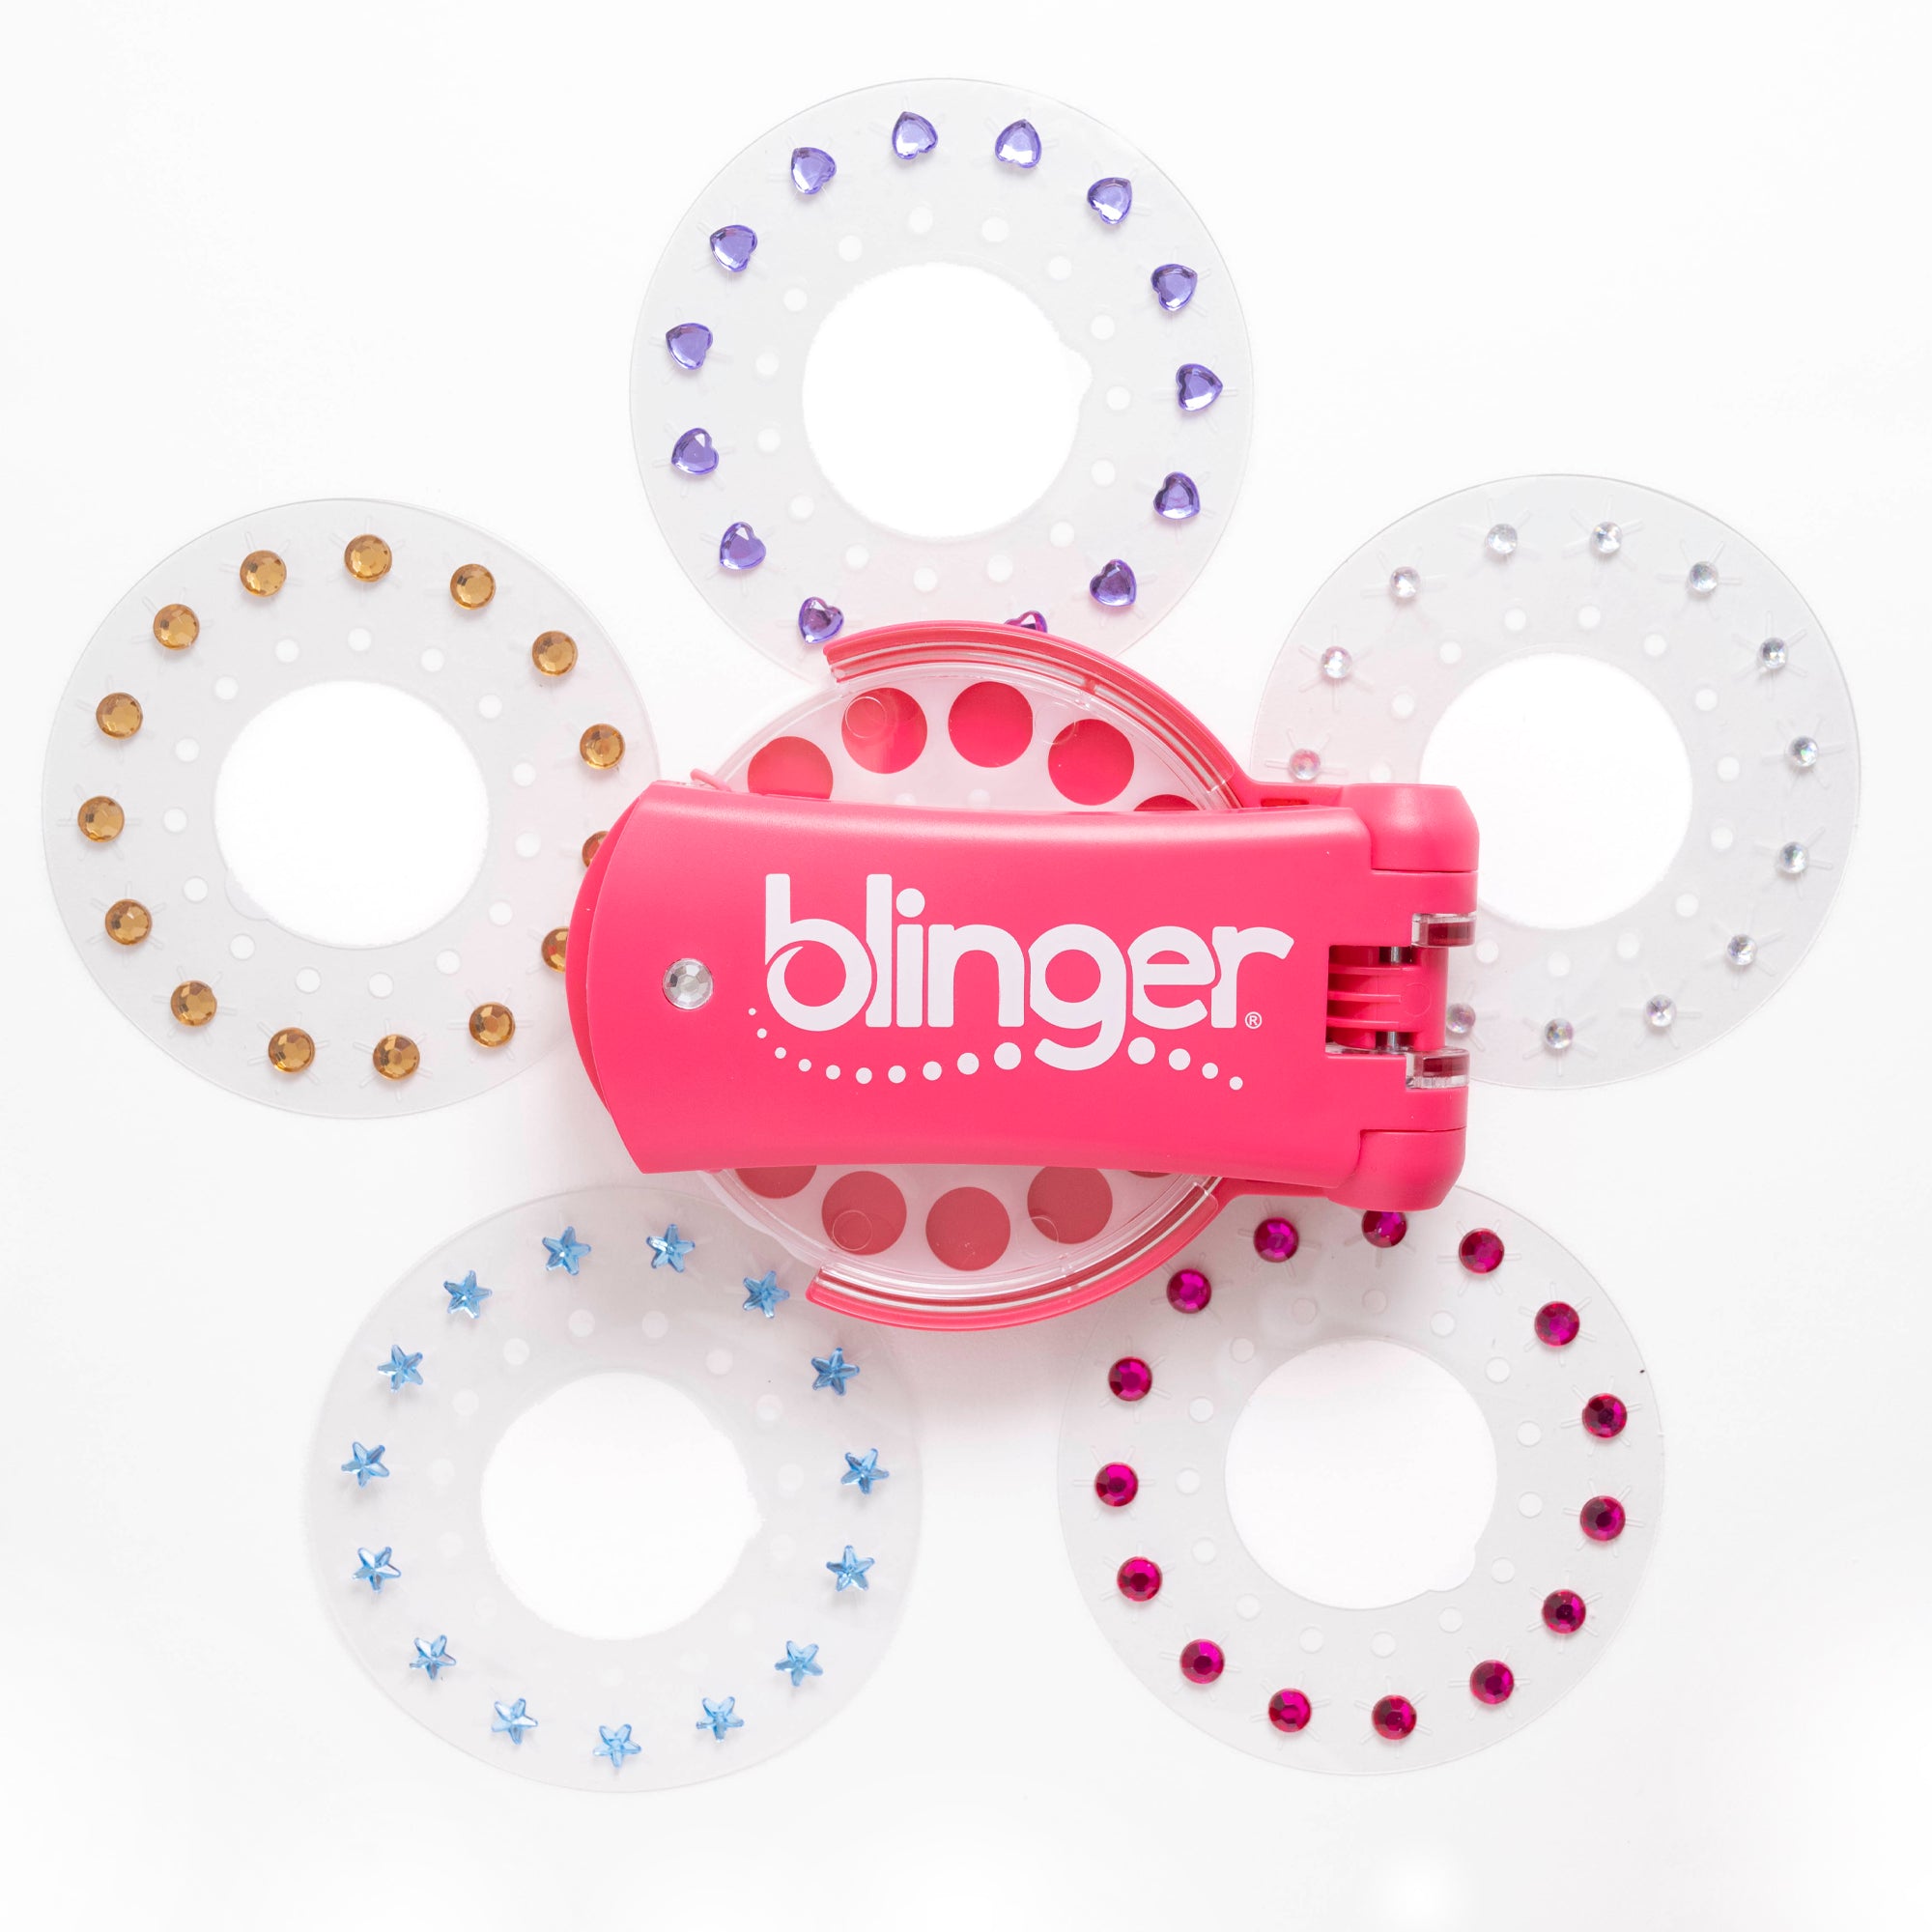 blinger® kids Dazzling Collection Starter Kit with blinger® Styling Tool + 75 Colorful Hair Gems